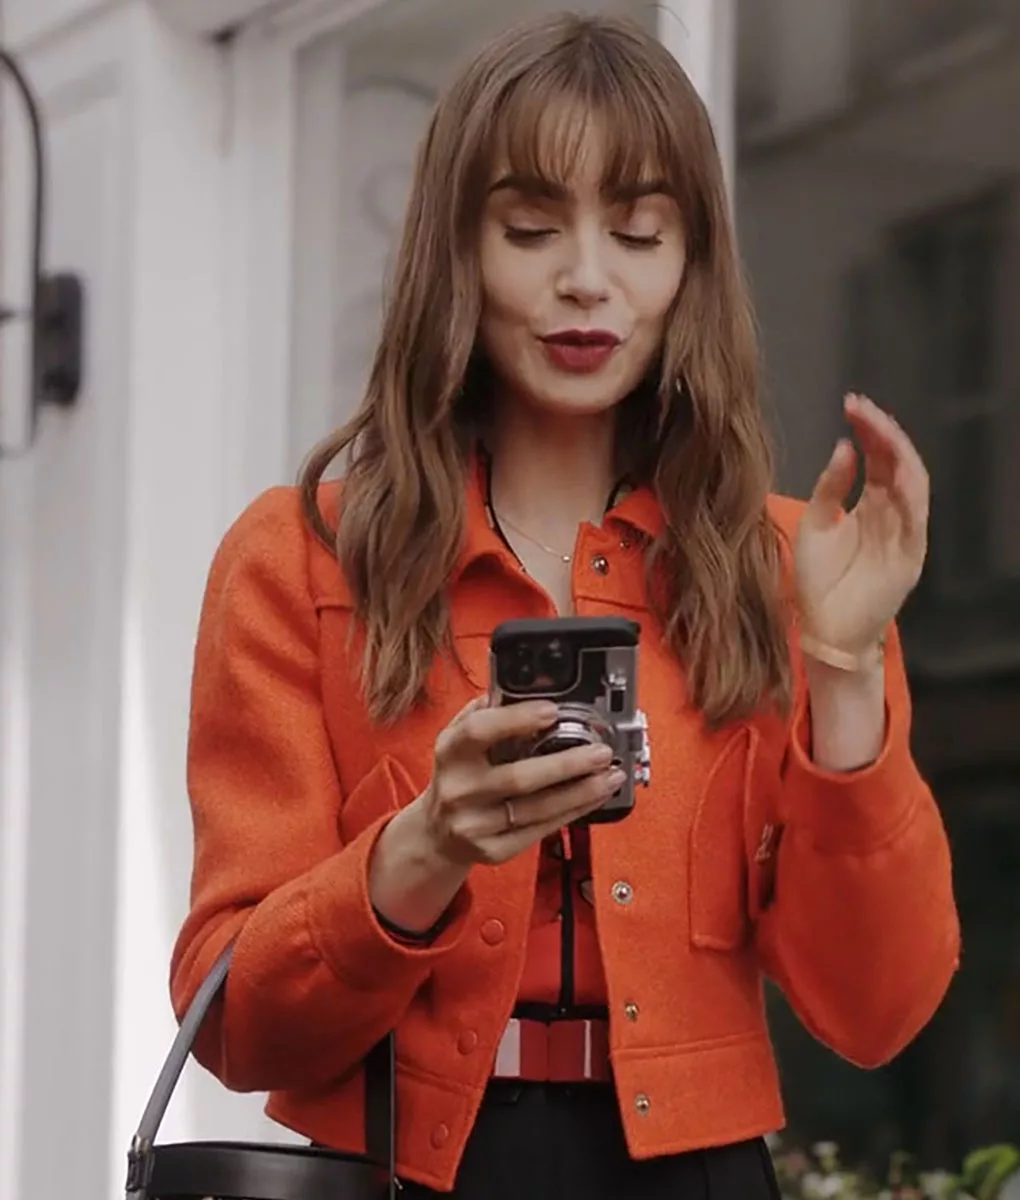 Lily Collins Emily in Paris S03 Emily Cooper Orange Jacket